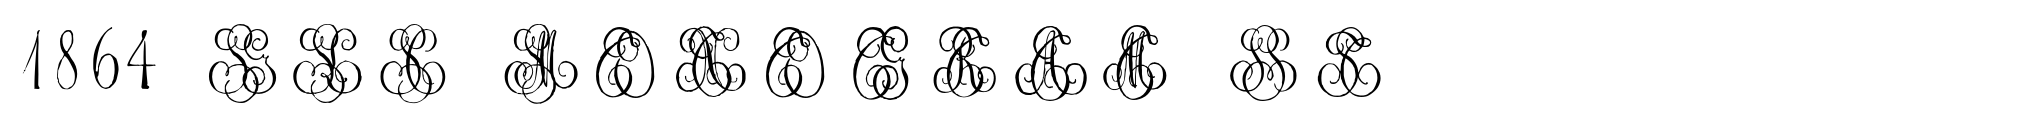 1864 GLC Monogram ST image